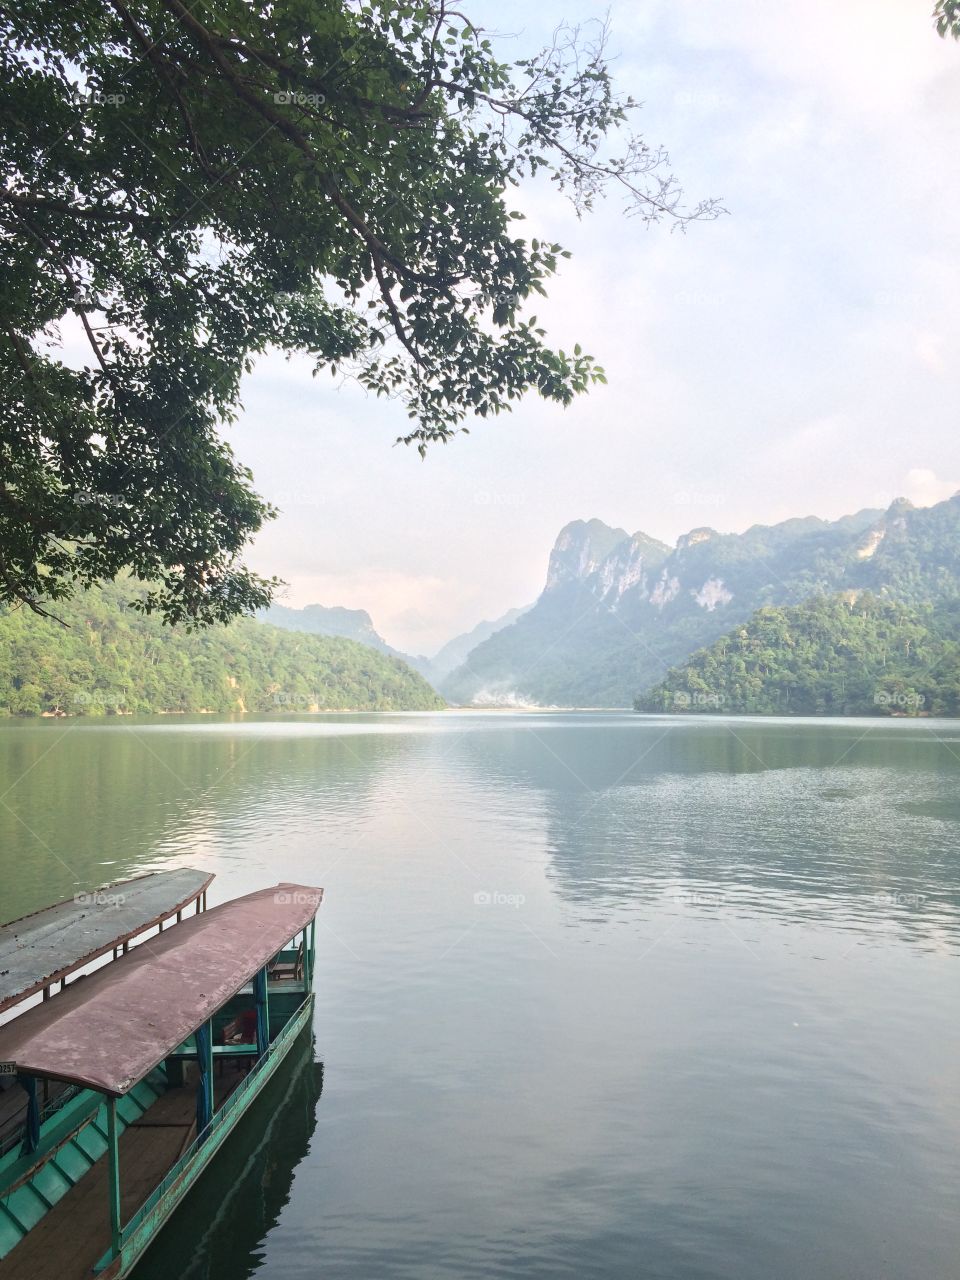 Ba Be national park, Vietnam